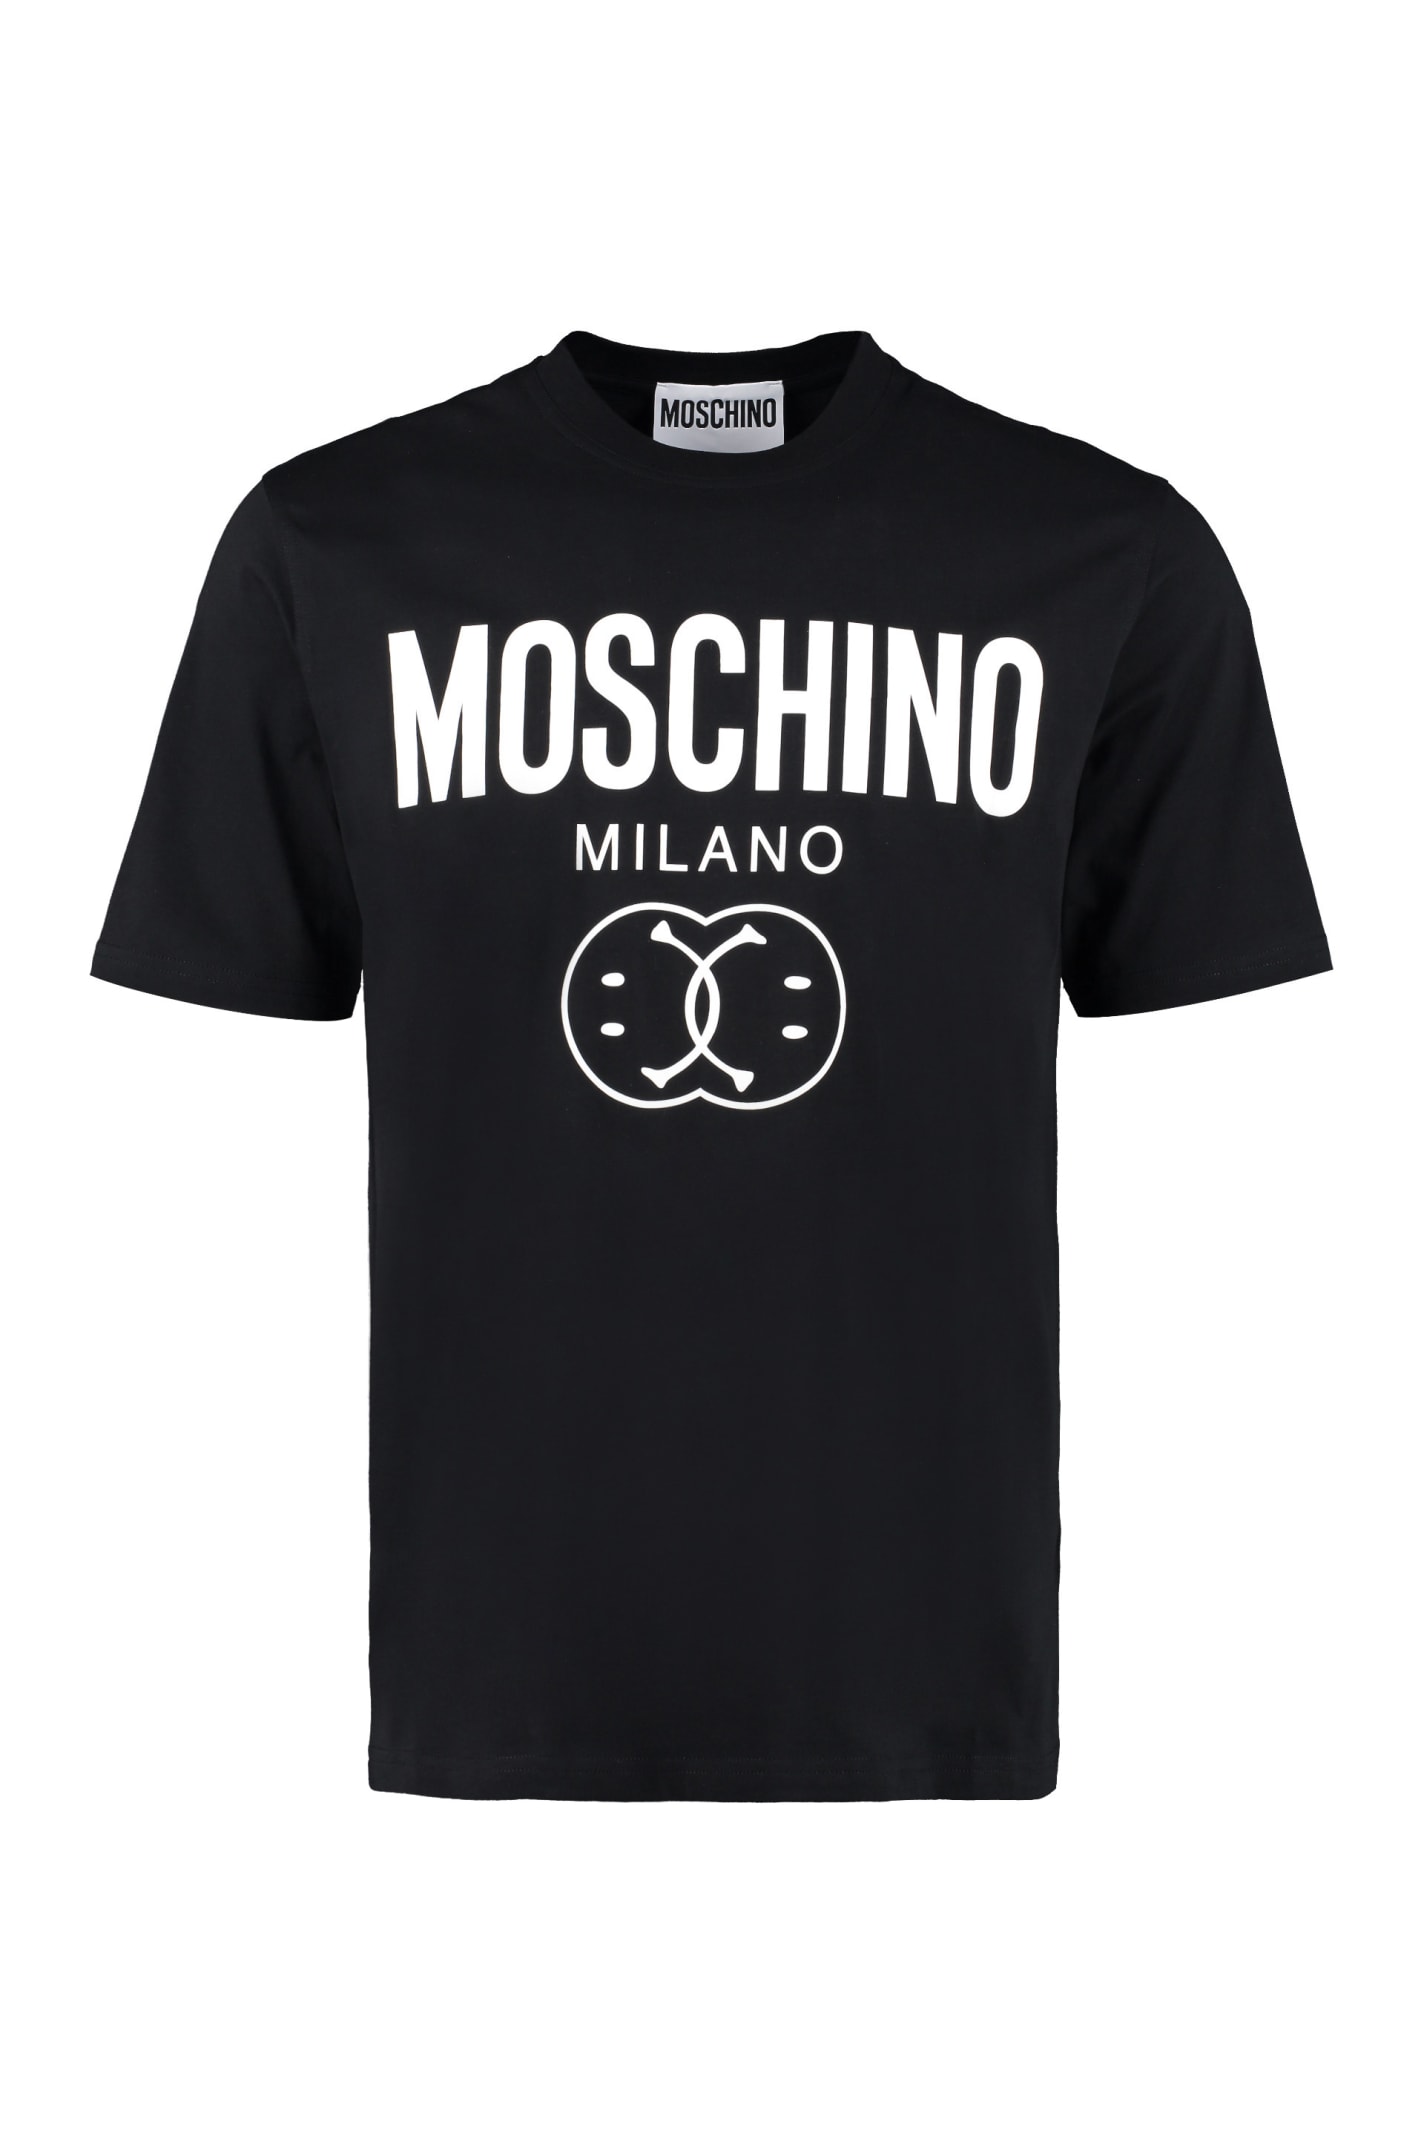 Moschino Smiley Printed Cotton T-shirt